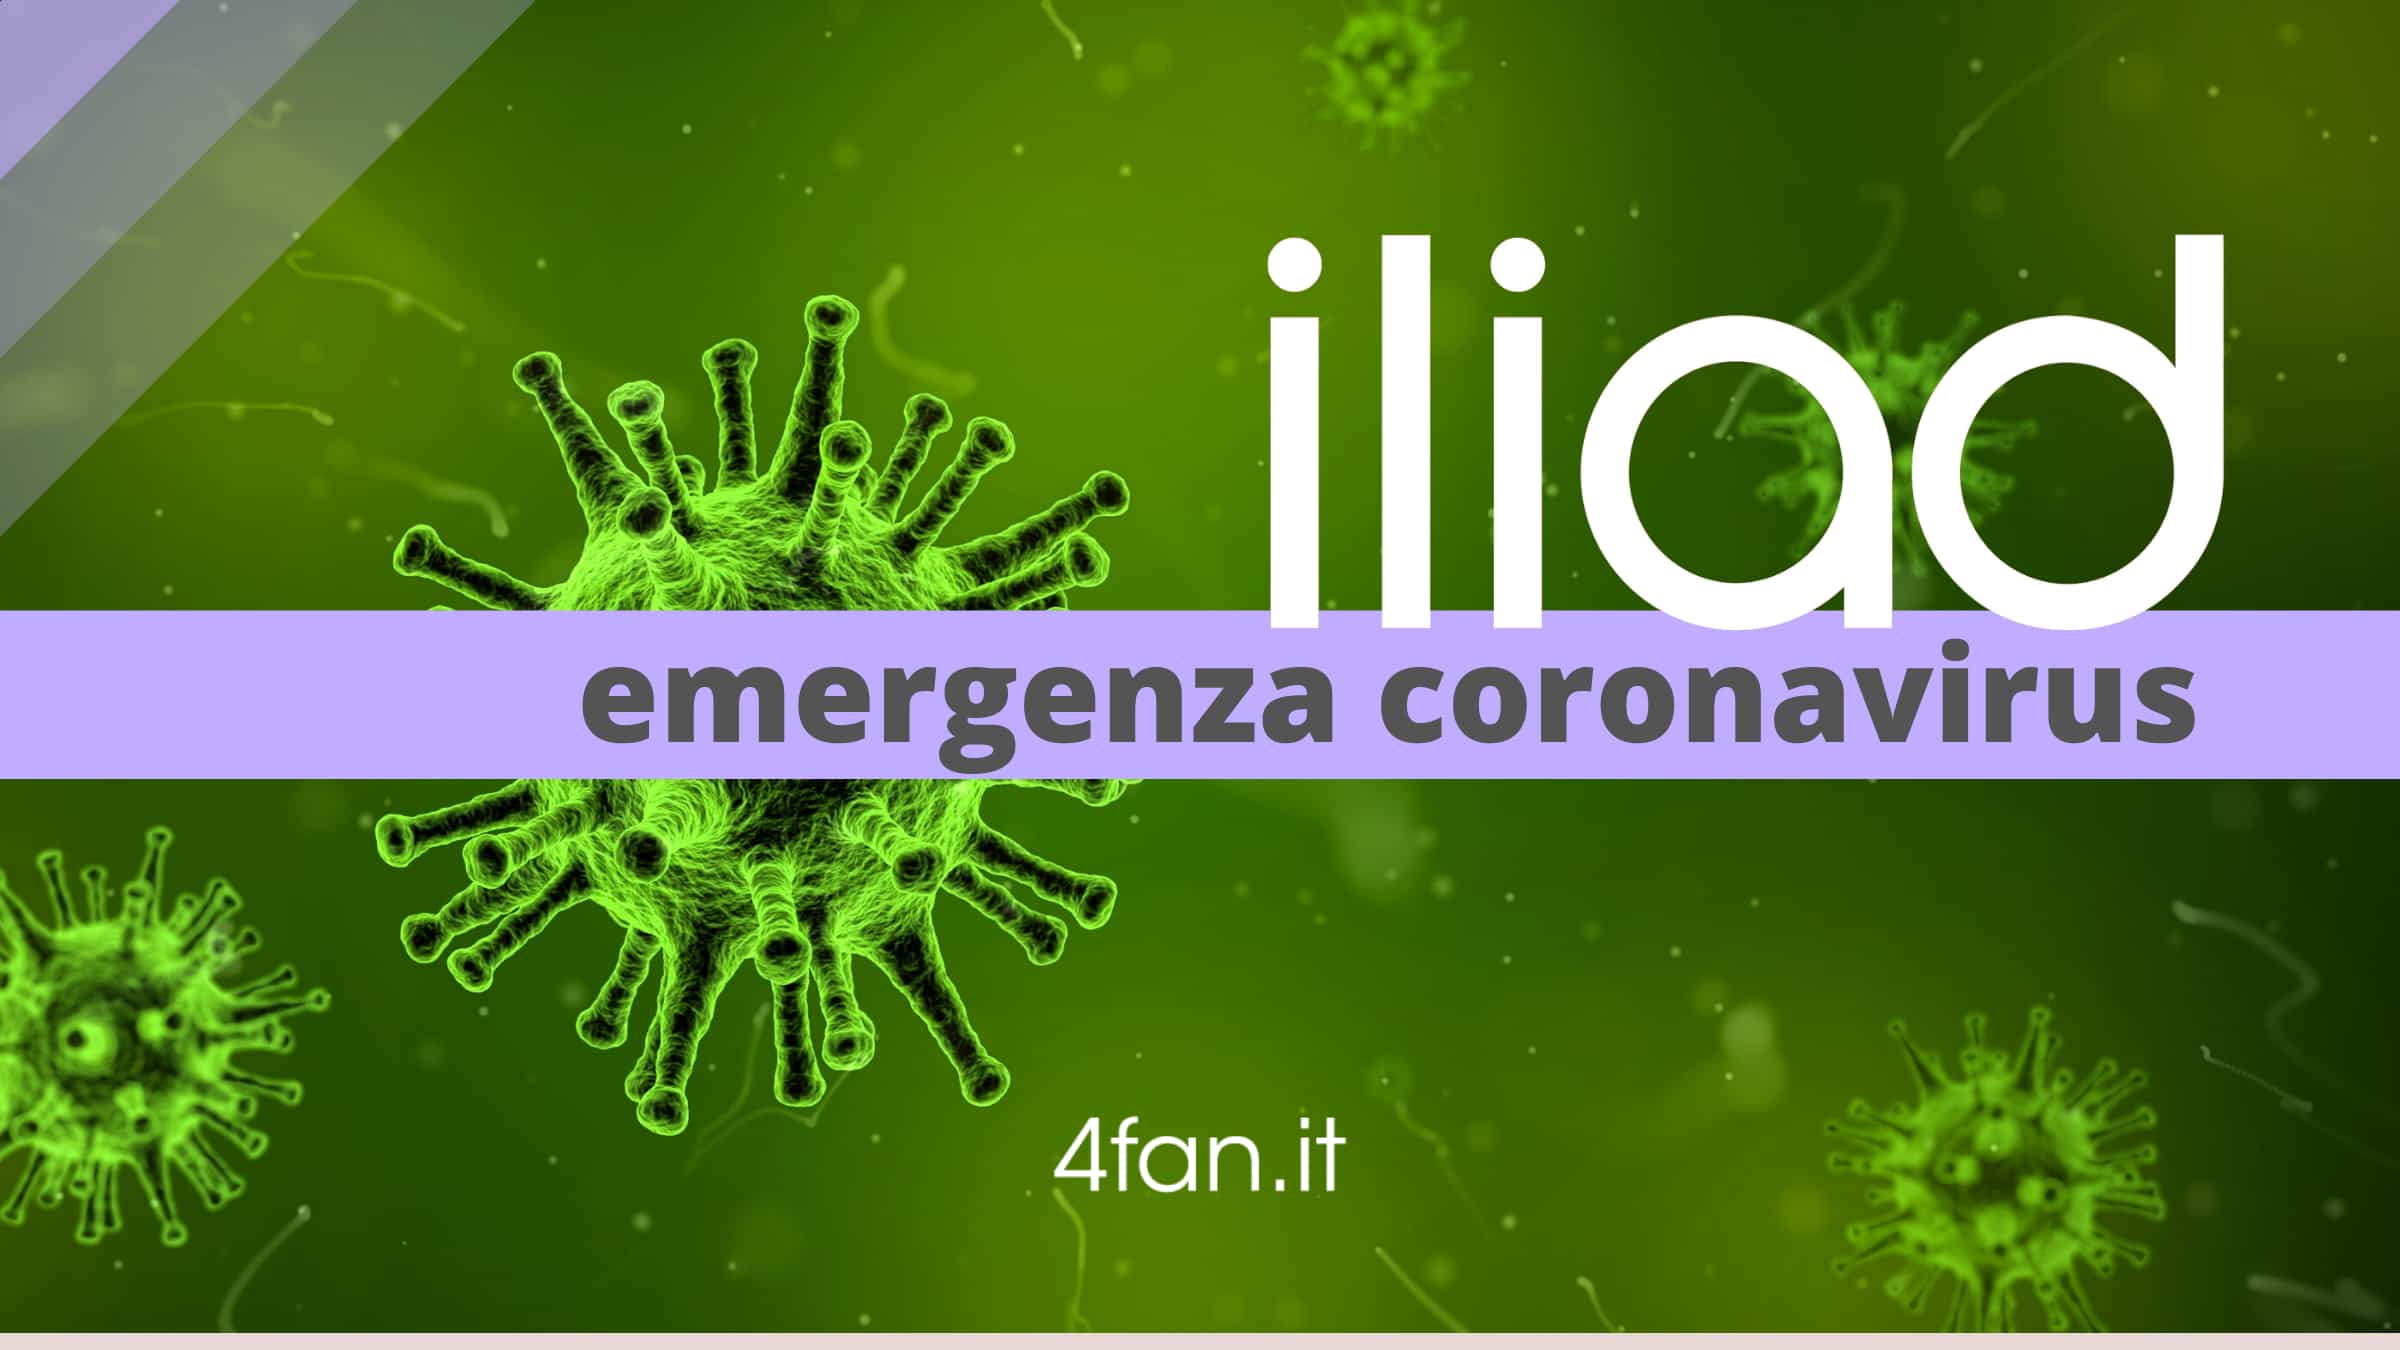 Iliad emergenza coronavirus